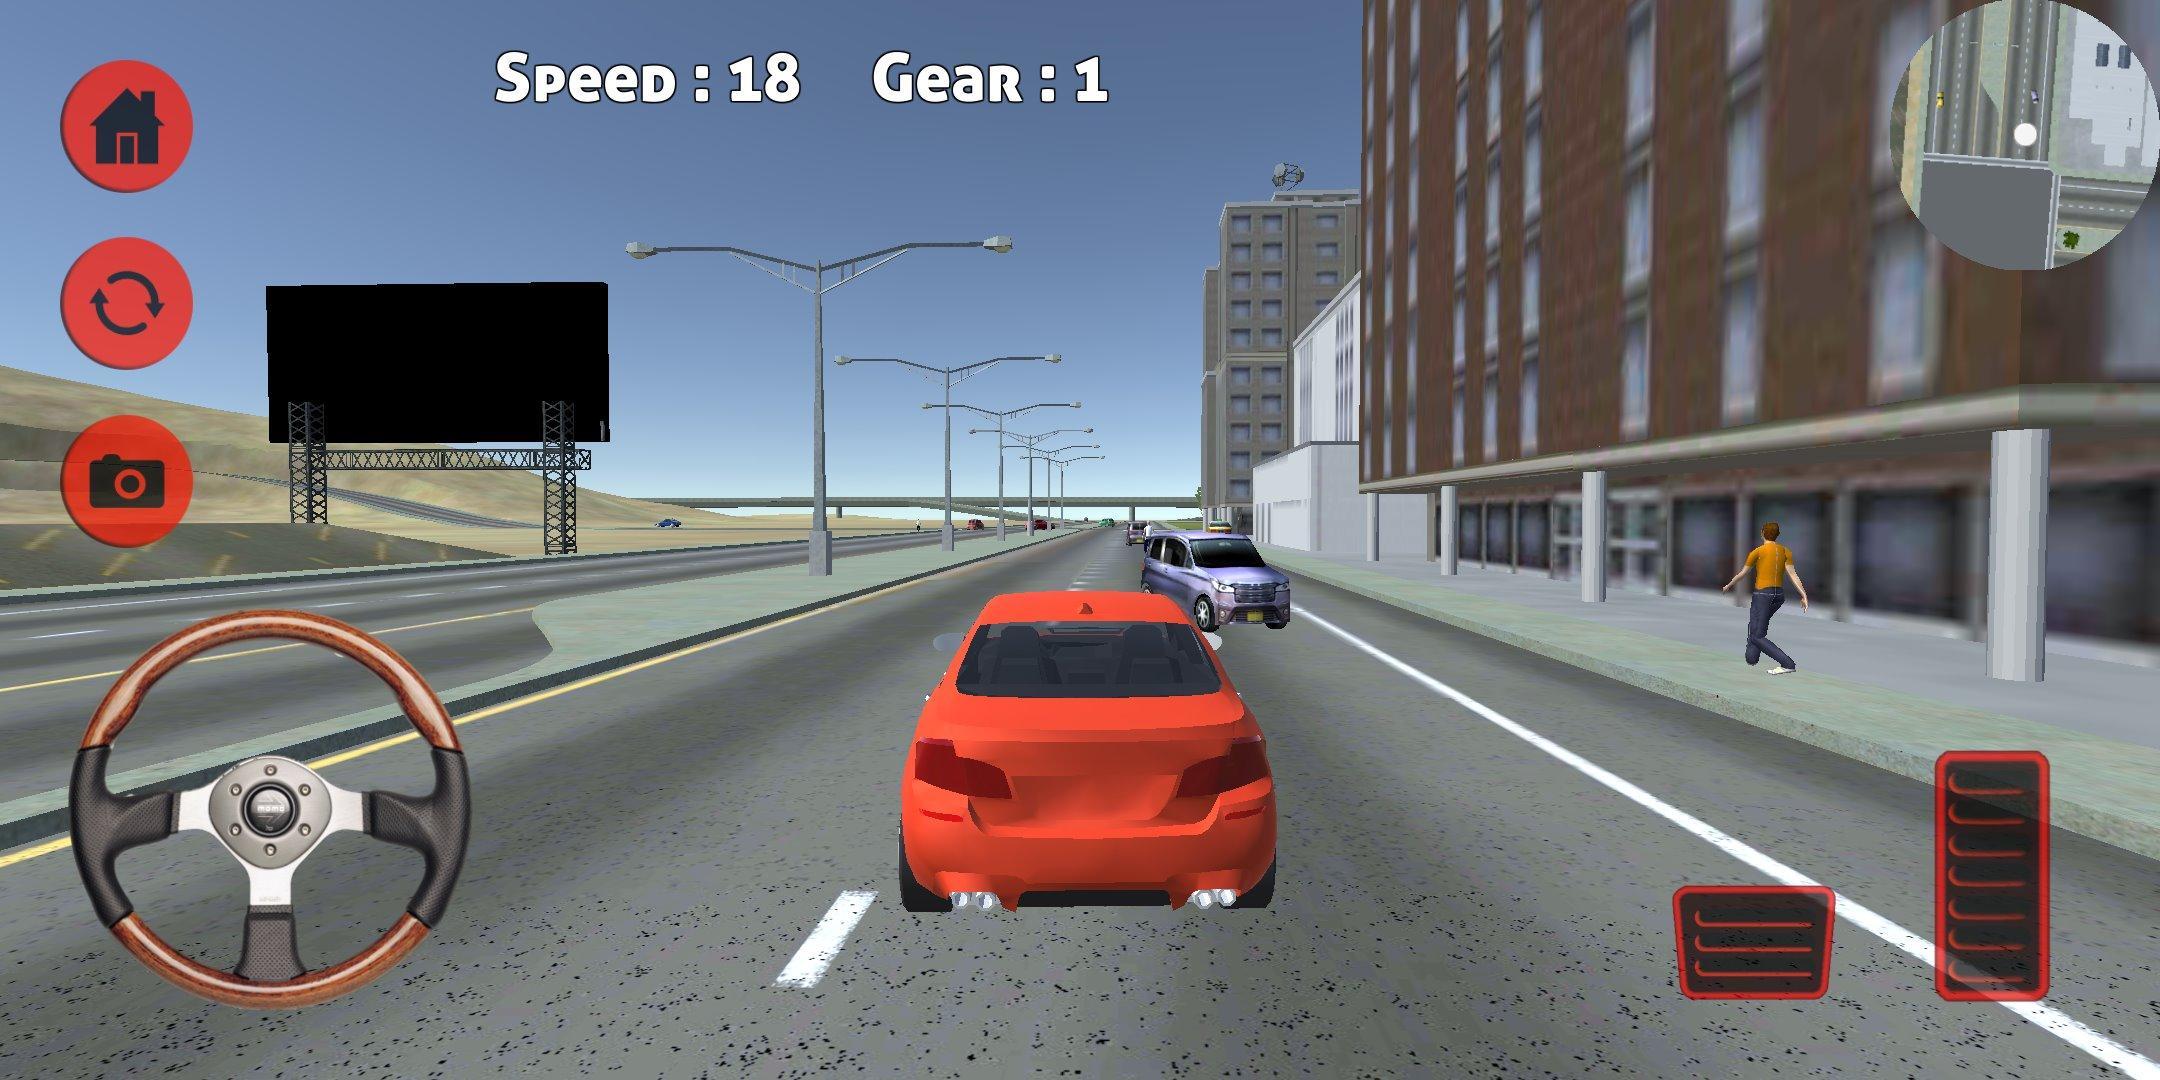 M5 E60 Driving Simulator 1.1 Screenshot 3